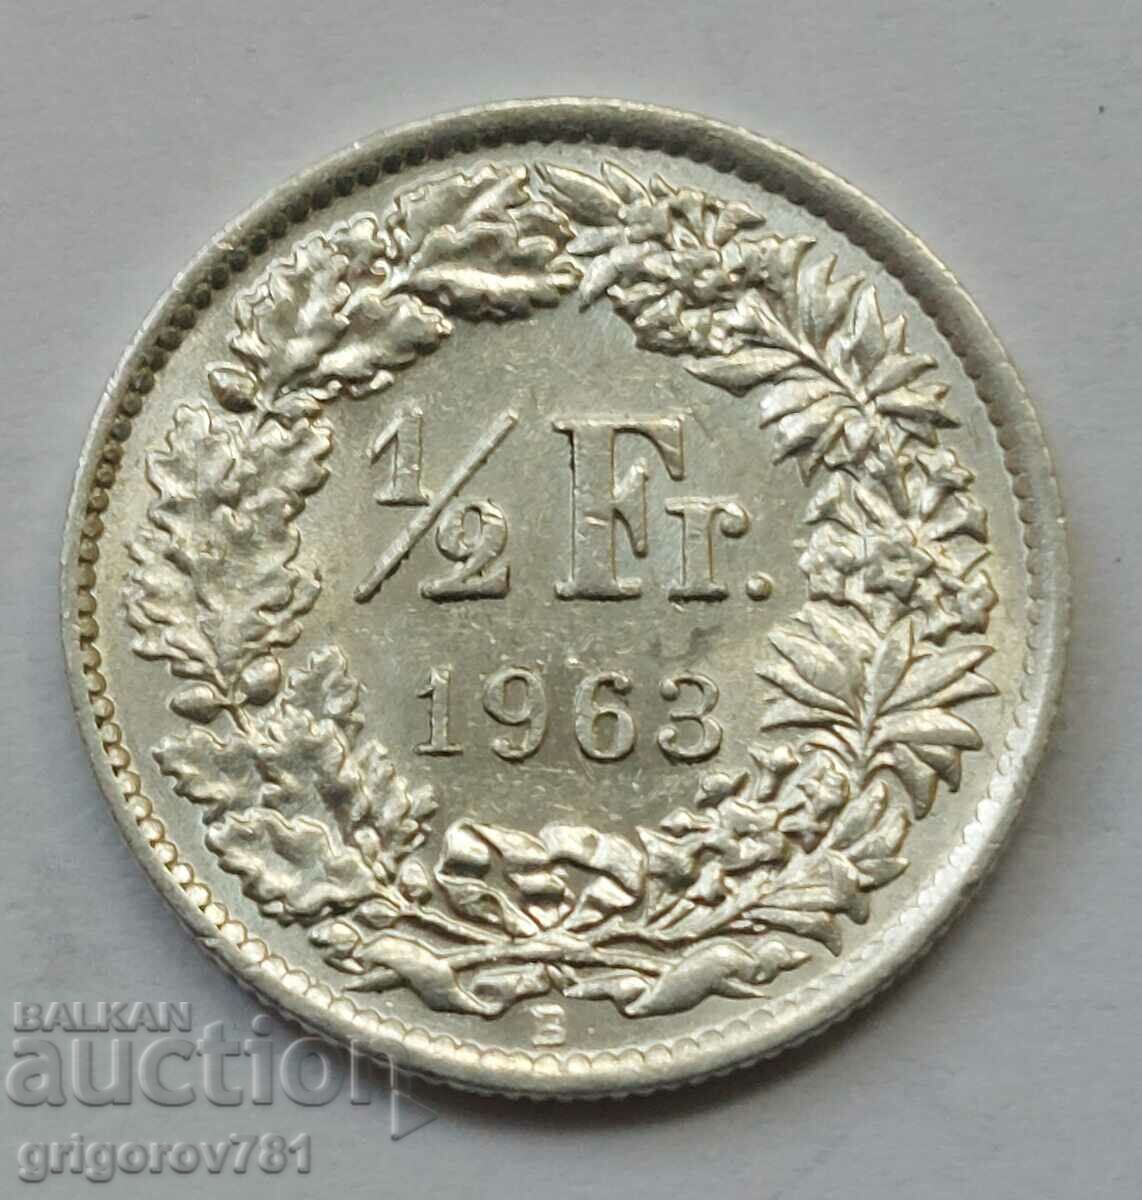 1/2 Franc Silver Switzerland 1963 B - Silver Coin #135